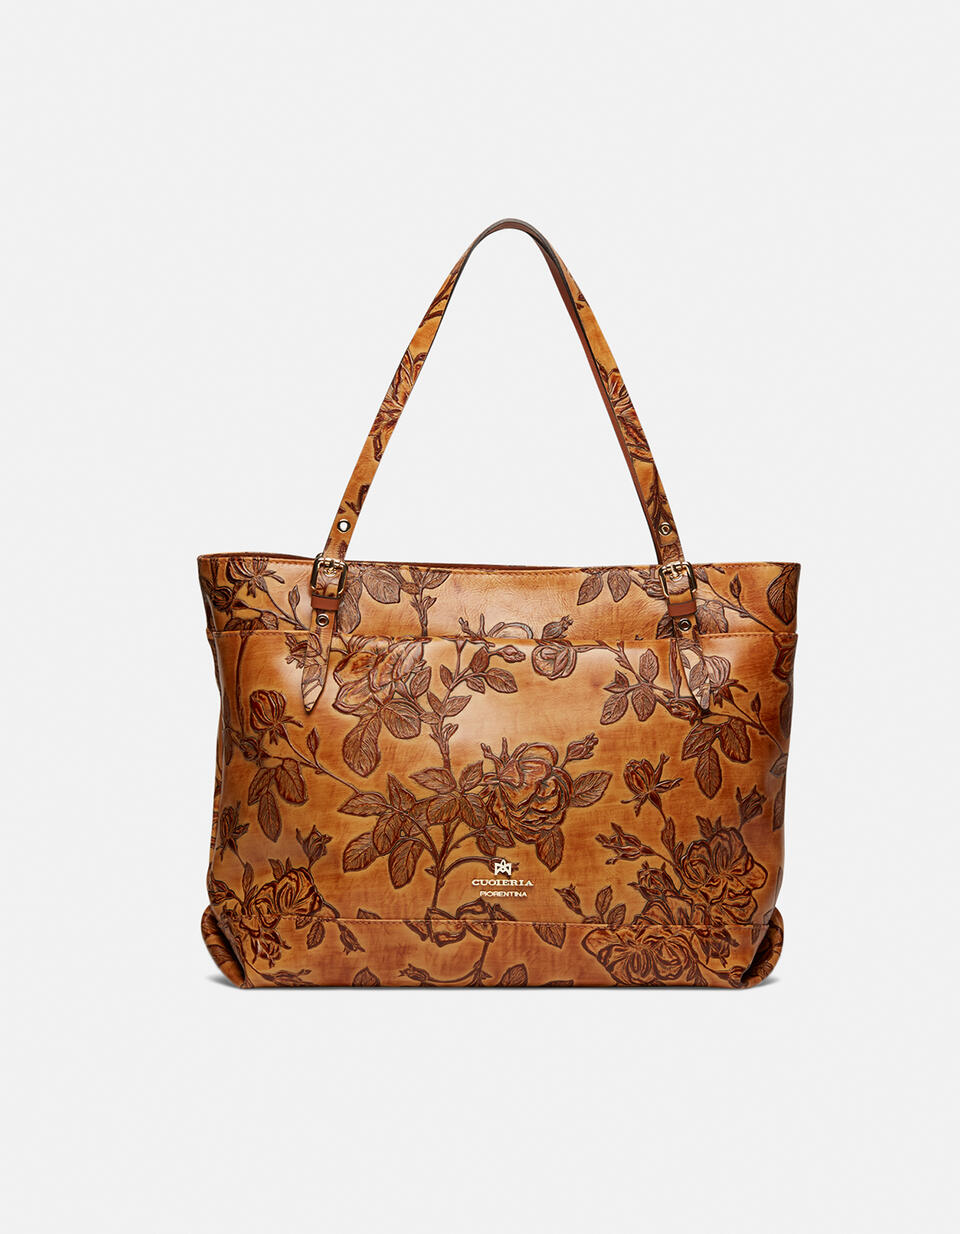 Big shopping bag keystone design - SHOPPING - WOMEN'S BAGS | bags Mimì BEIGE - SHOPPING - WOMEN'S BAGS | bagsCuoieria Fiorentina